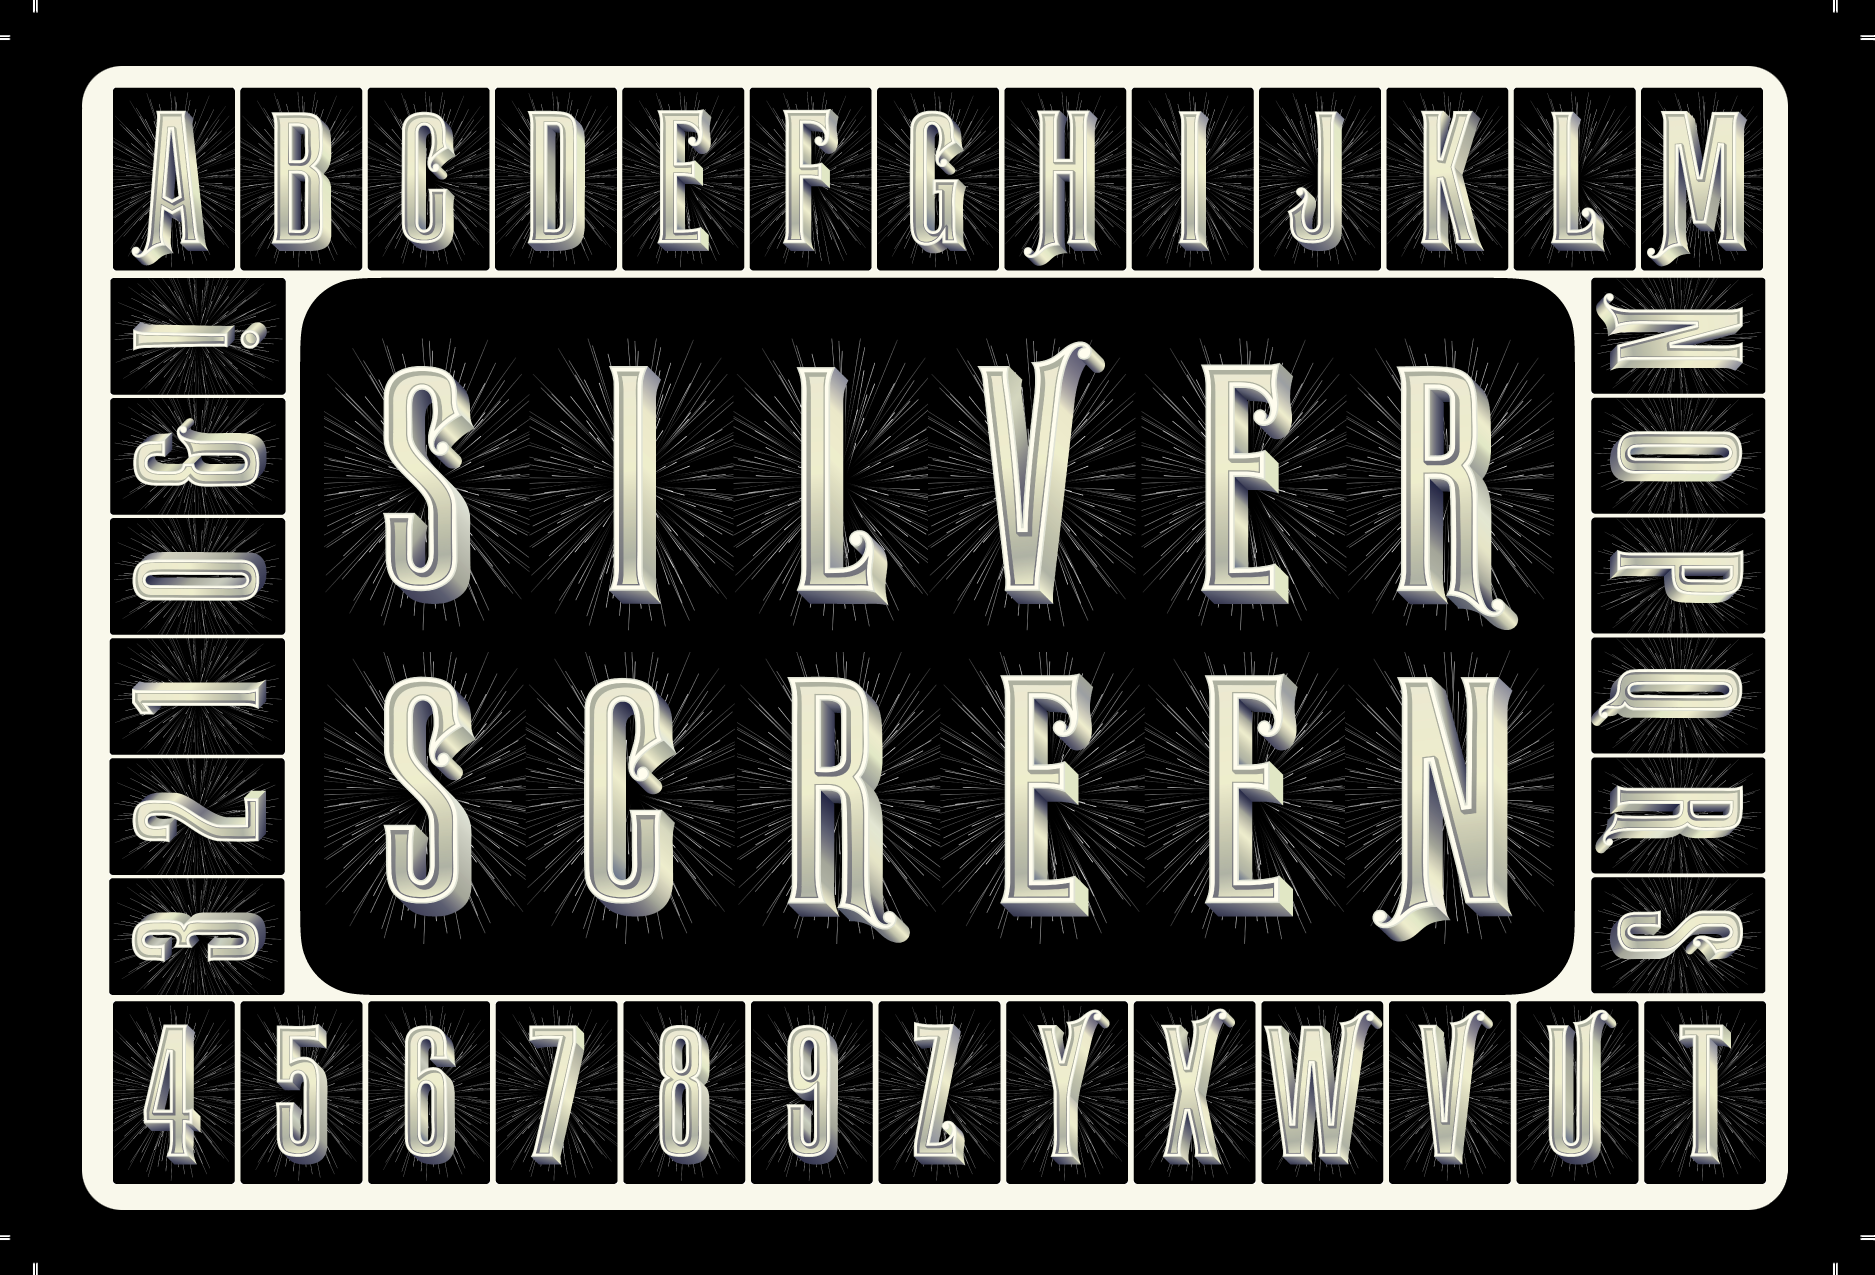 We Love You! - Silver Screen